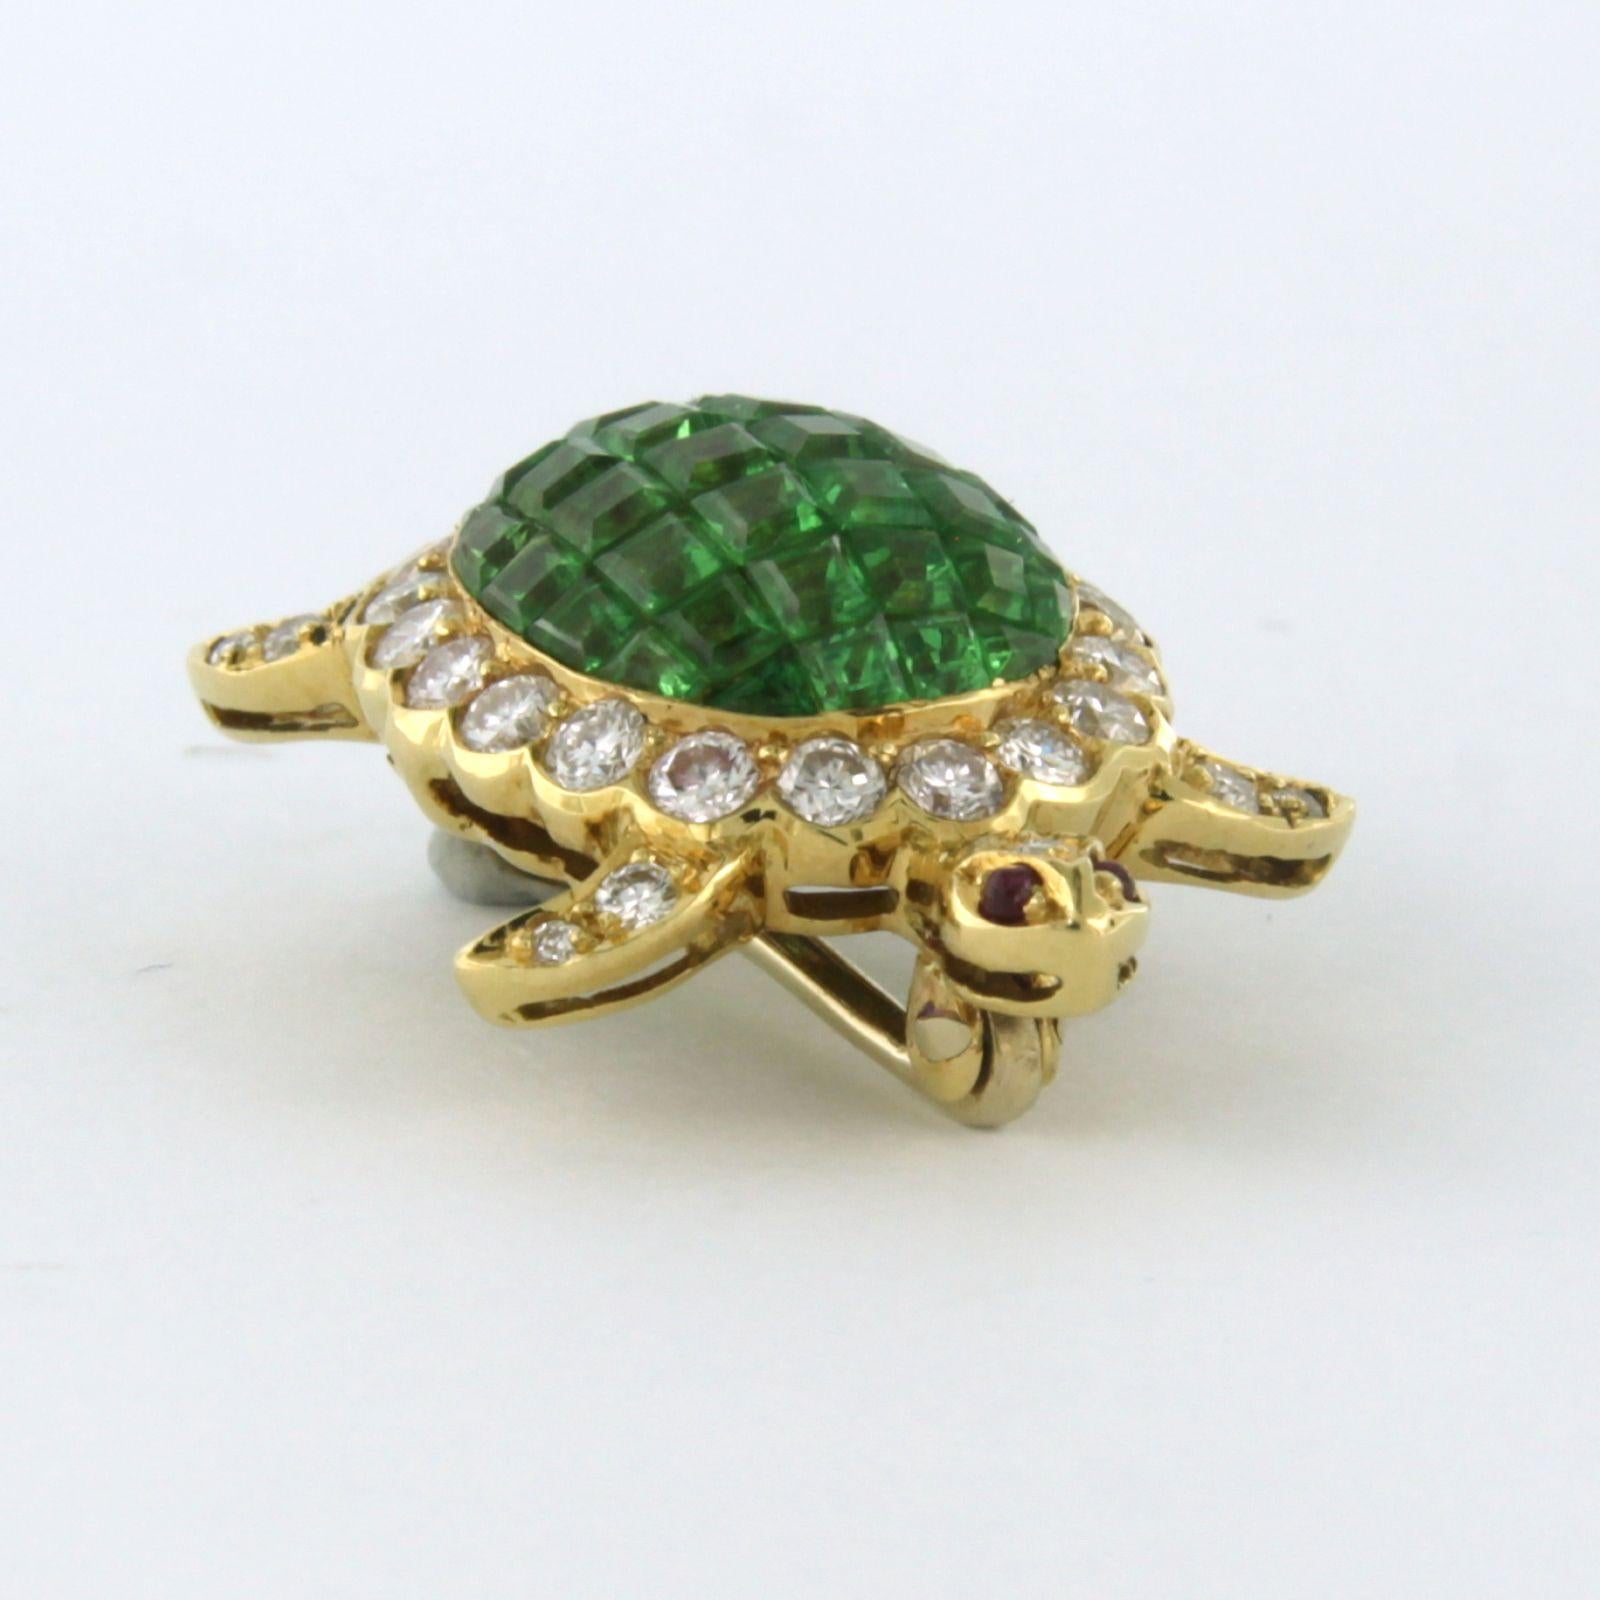 Modern Brooch shape of Turtle with peridot and diamonds 18k yellow gold